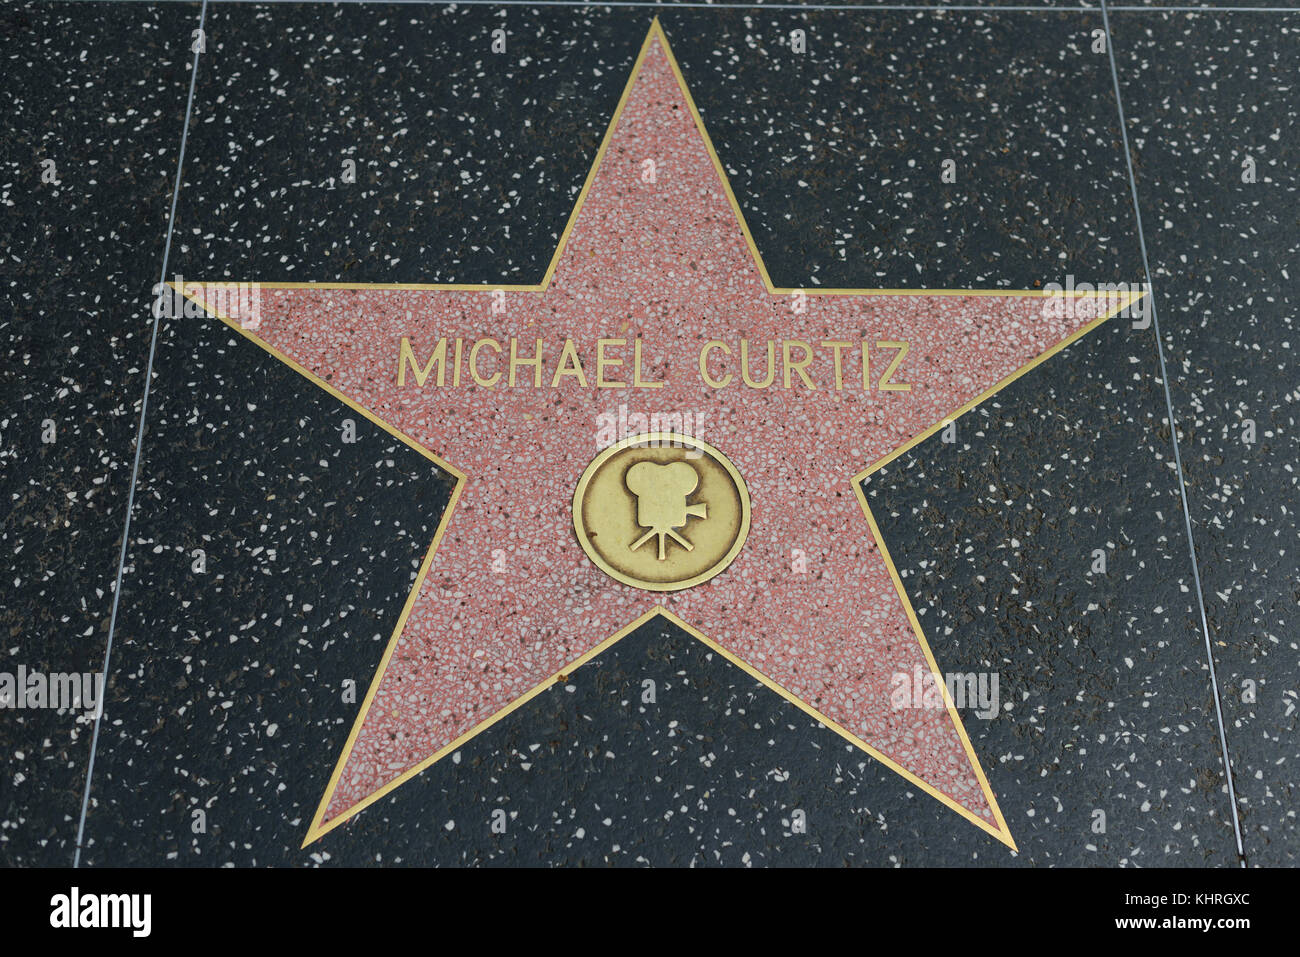 HOLLYWOOD, CA - DEZEMBER 06: Michael Curtiz Star auf dem Hollywood Walk of Fame in Hollywood, Kalifornien am 6. Dezember 2016. Stockfoto